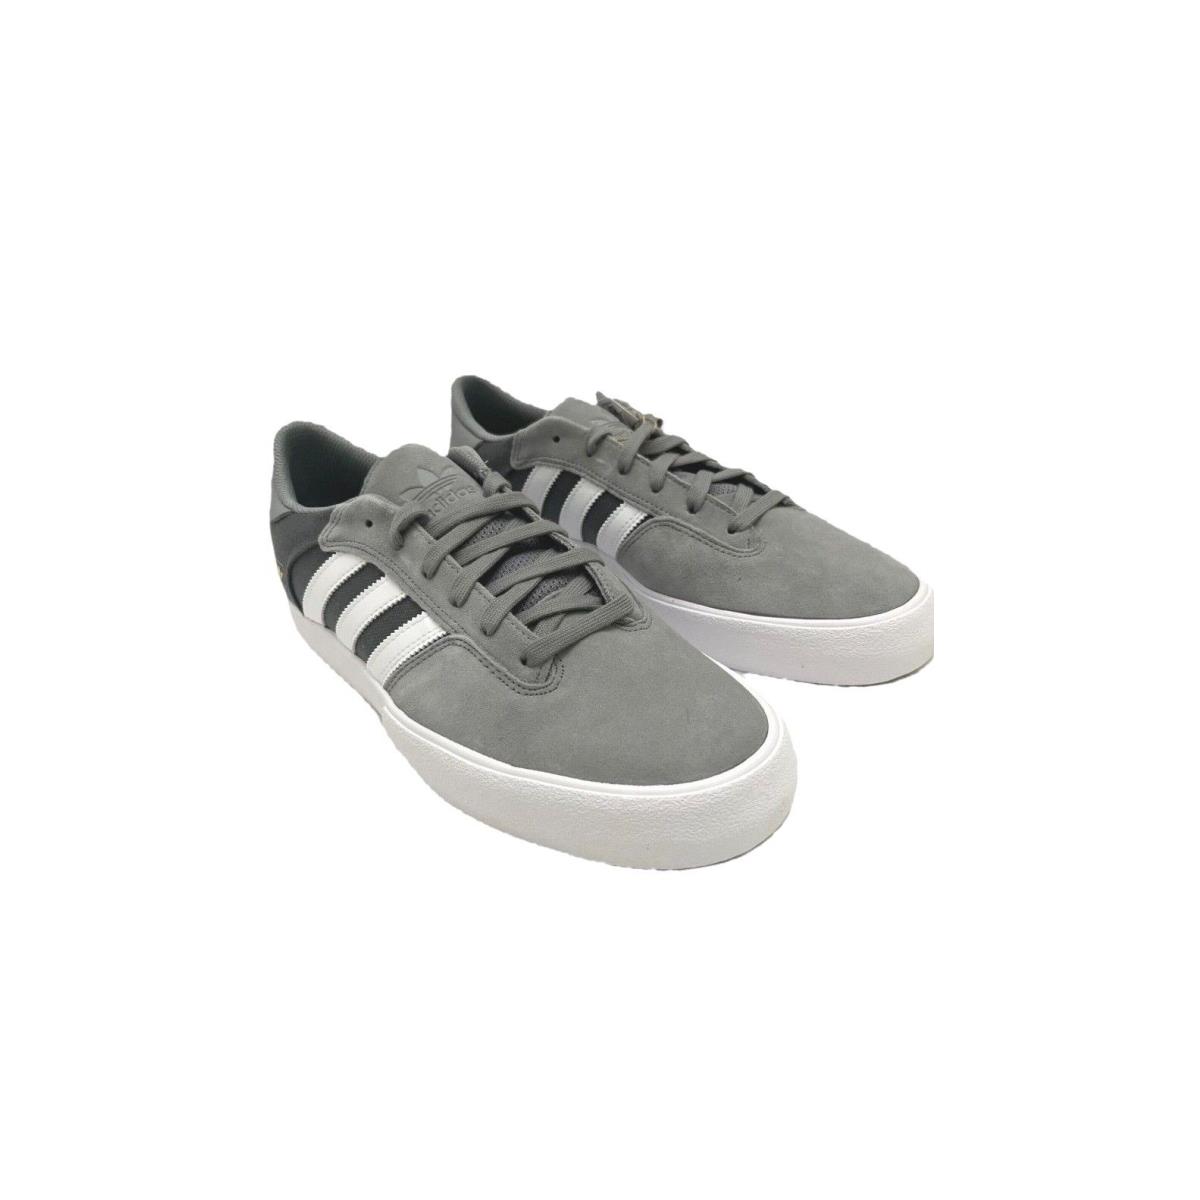 Adidas Men`s Matchbreak Super Activewear/casual Shoes - Grey Three/Grey Five/Cloud White